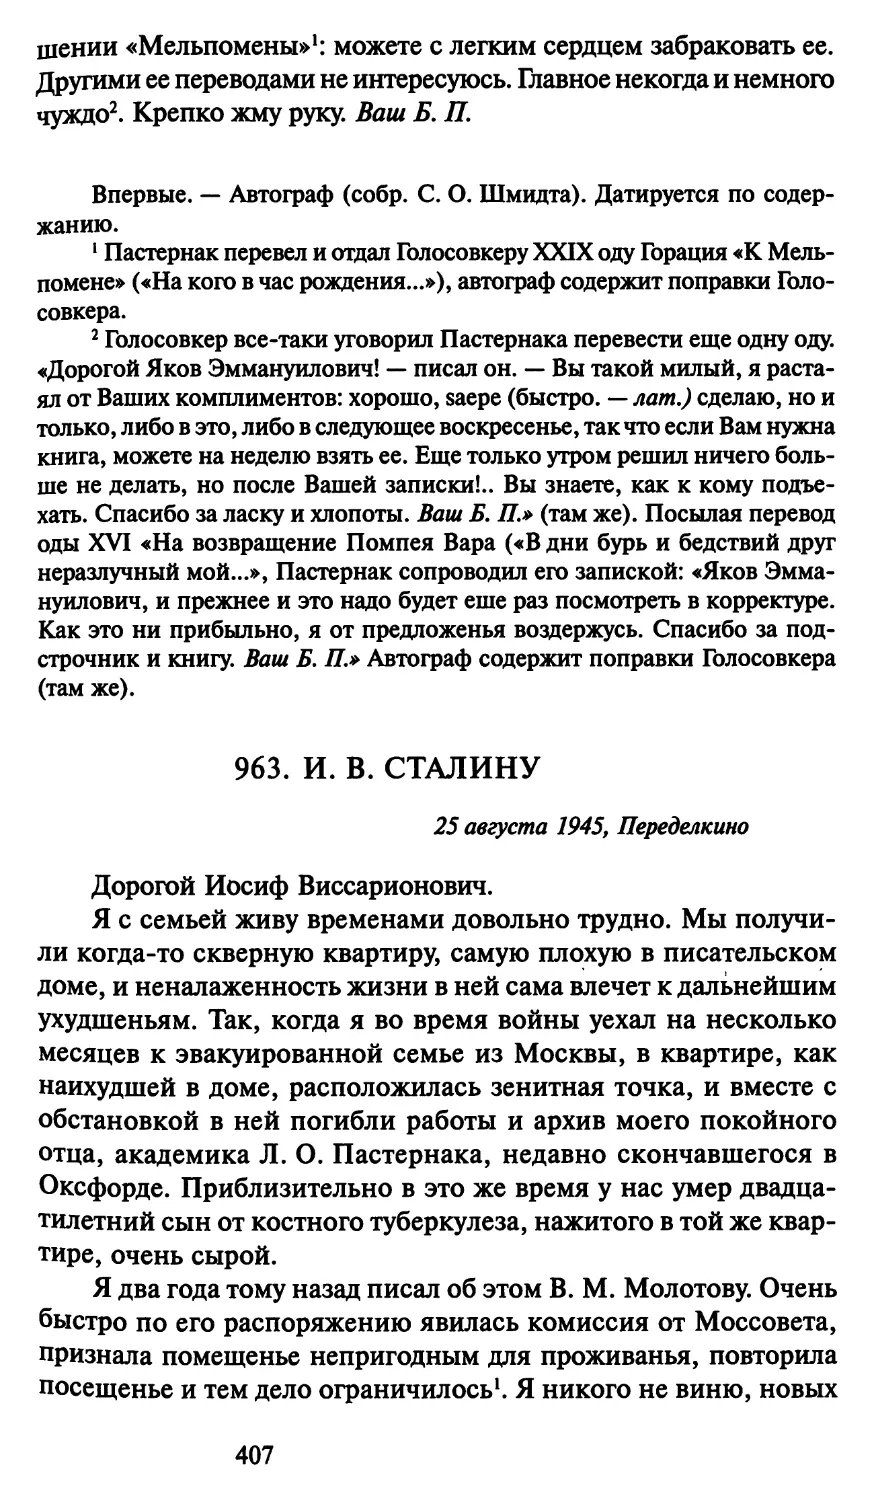 963. И. В. Сталину 25 августа 1945